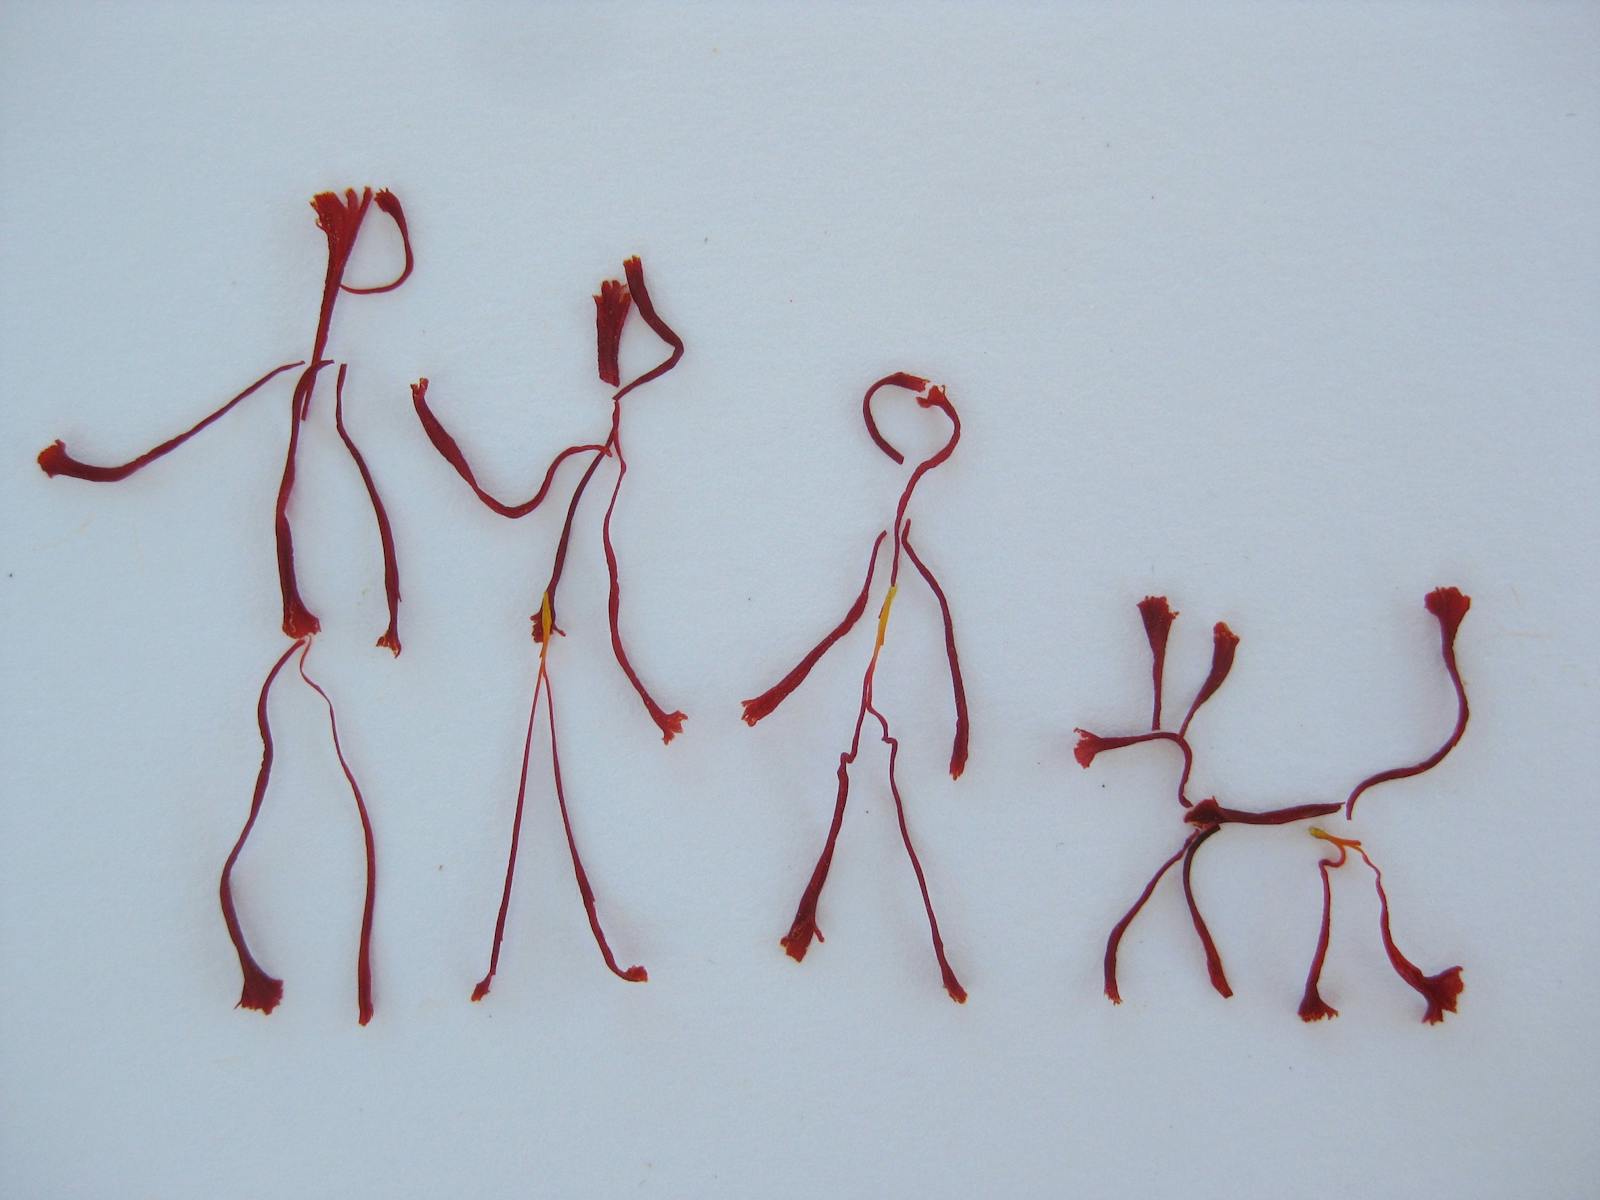 Caricature using saffron threads portraying our saffron family